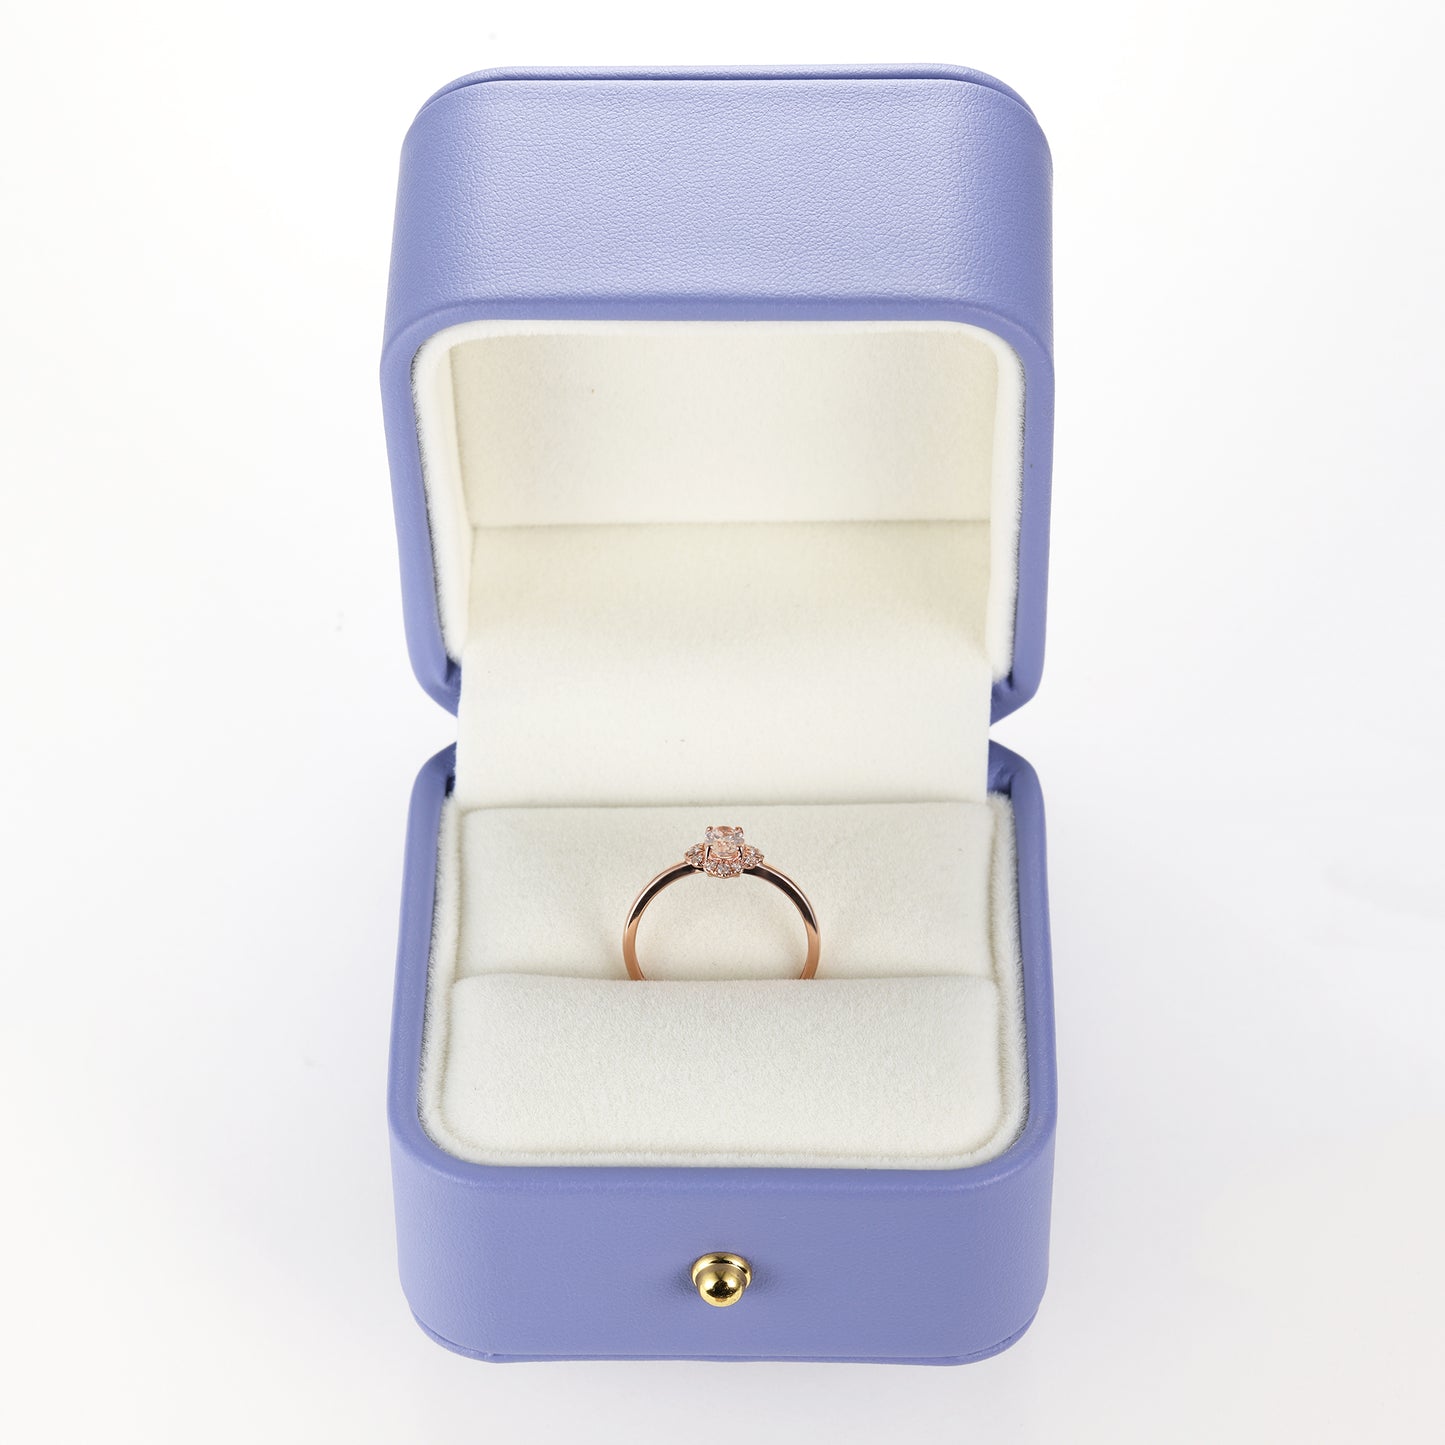 Oval Morganite Diamond Flower Ring